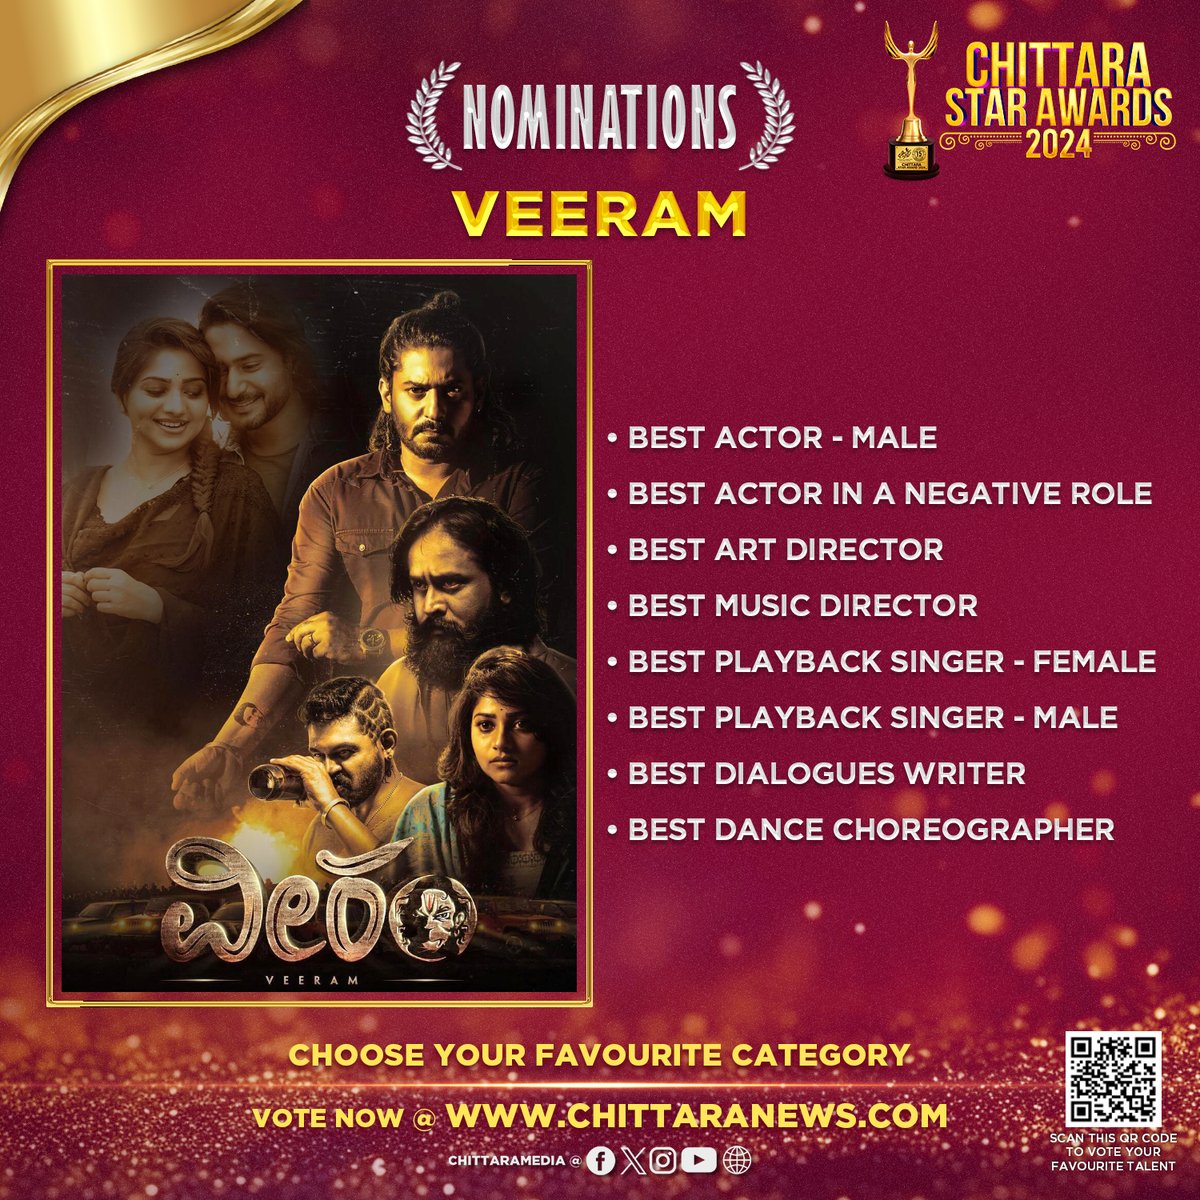 #Veeram 8 Nominations at #ChittaraStarAwards2024 Global Voting is Now Live : awards.chittaranews.com/poll/780/ Vote now and show your love for Team #Veeram #ChittaraStarAwards2024 #CSA2024